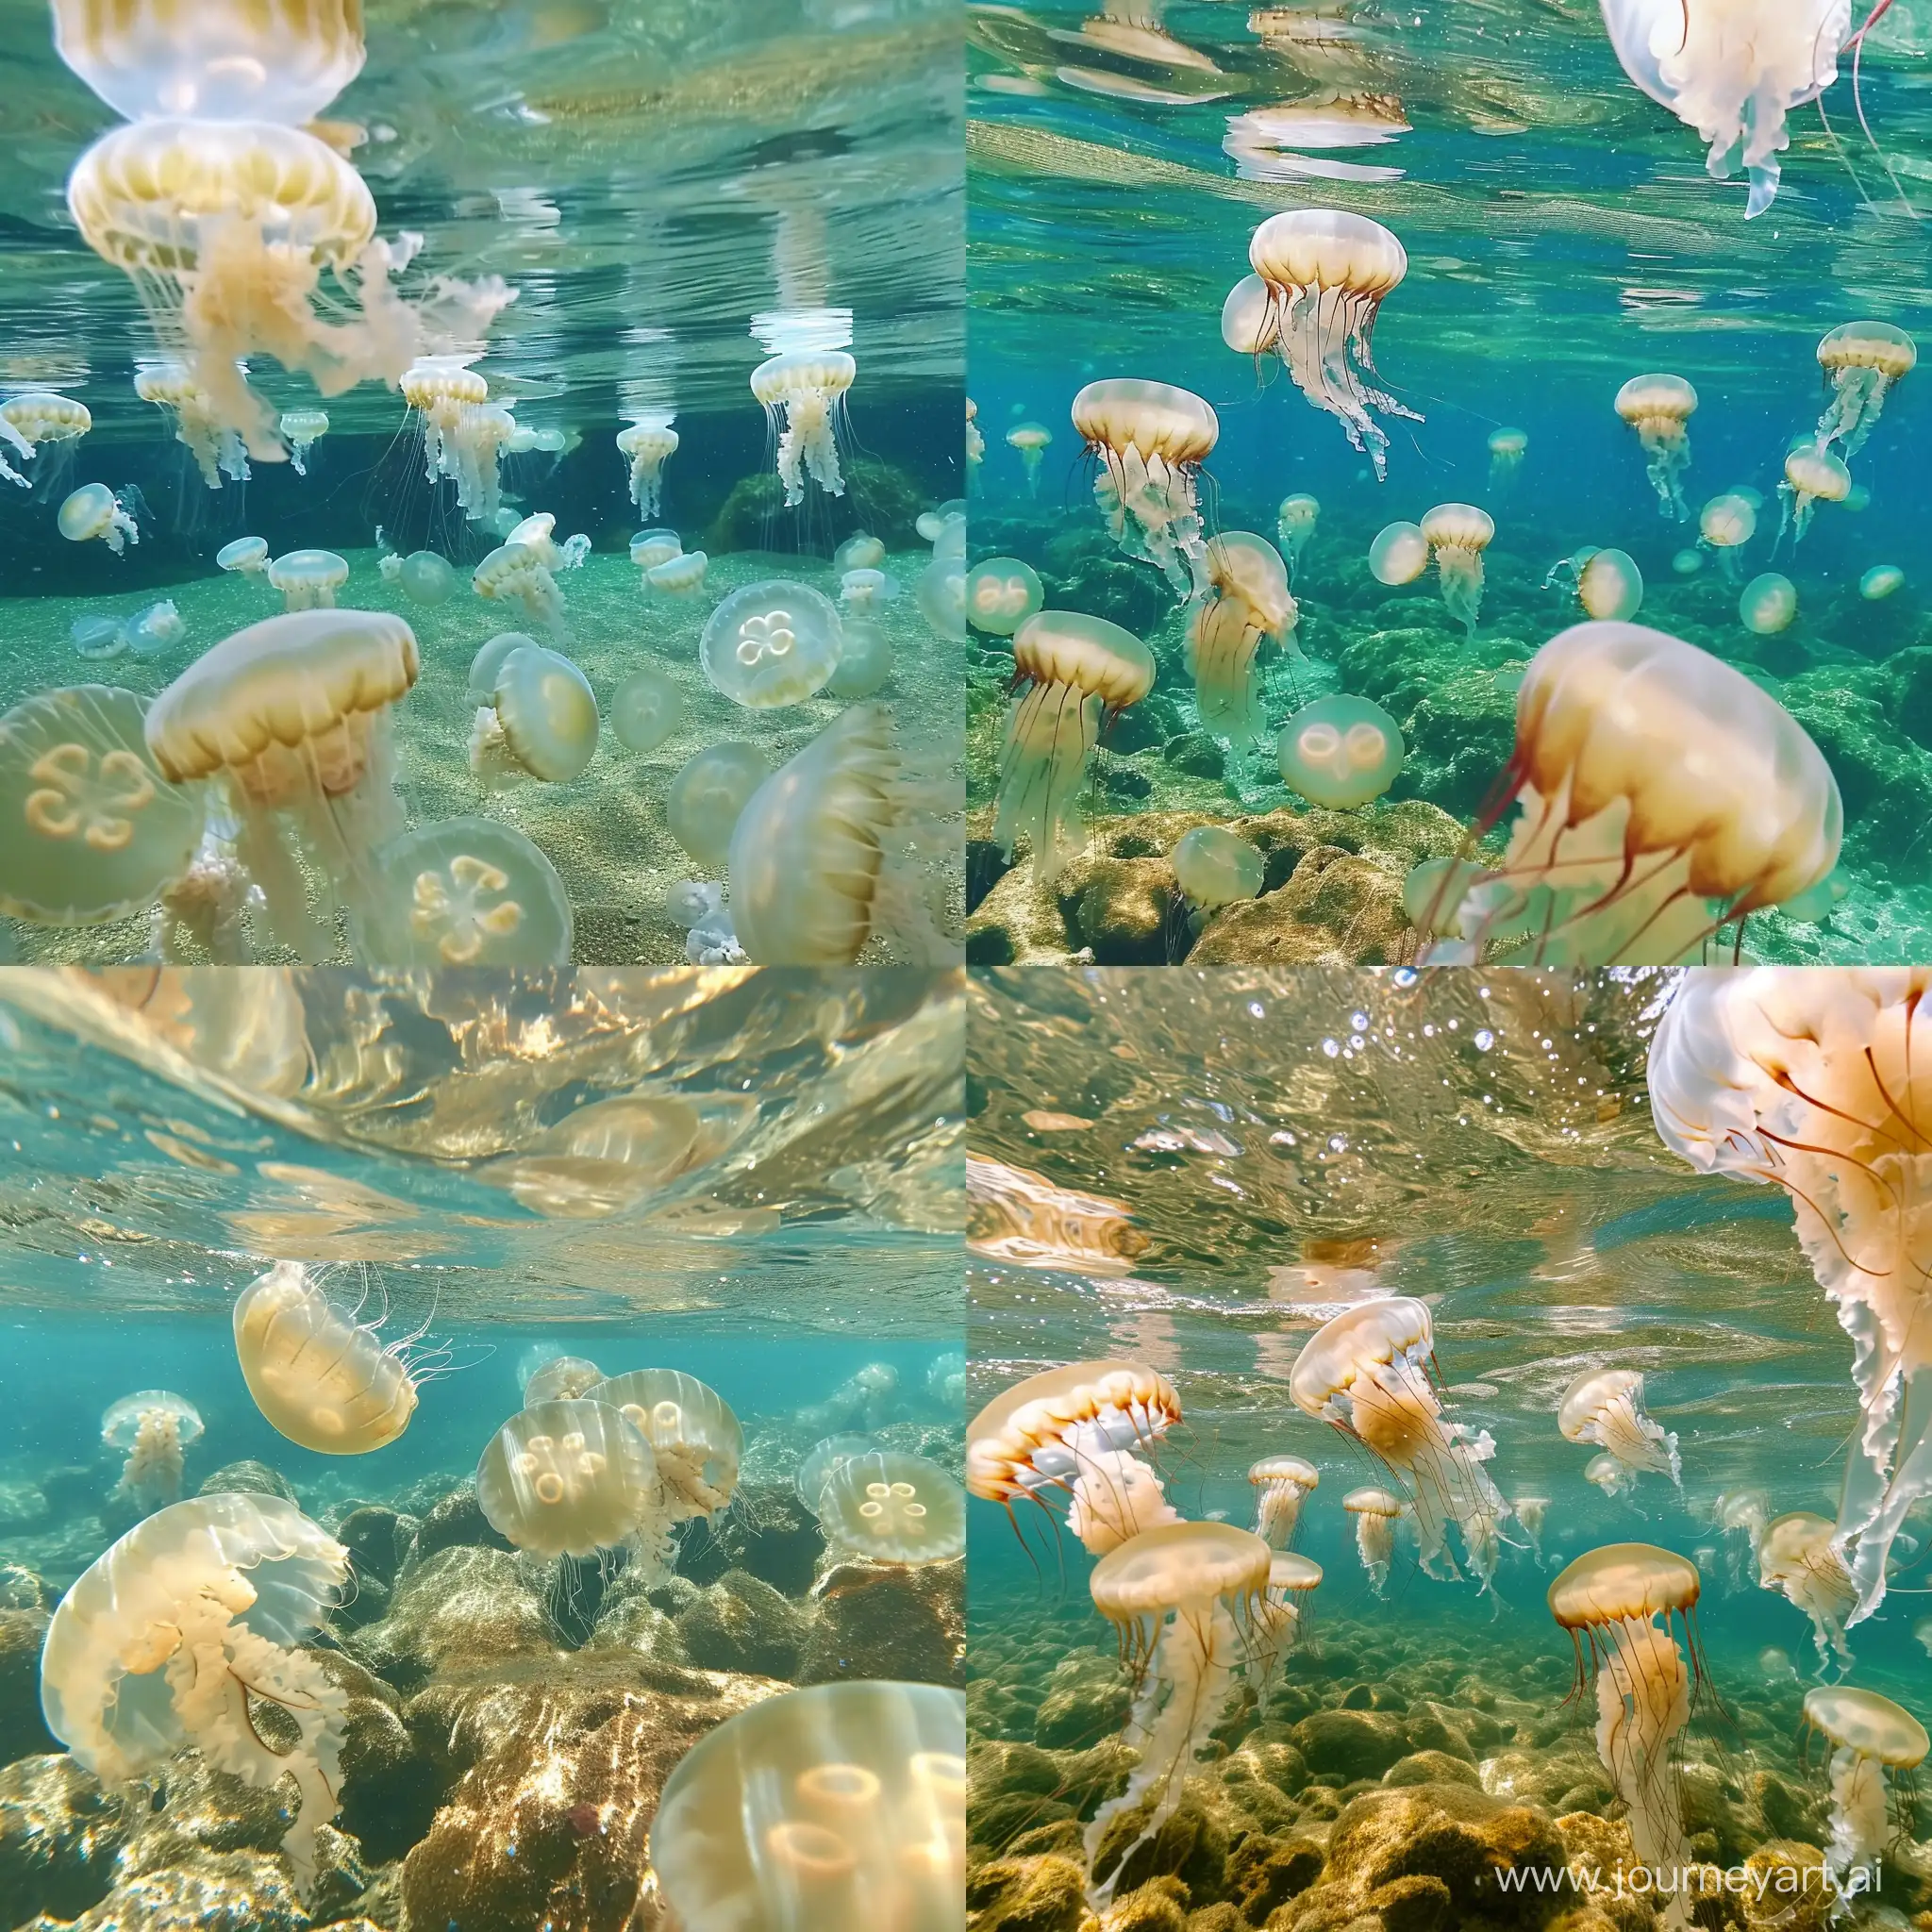  lots of jellyfish on the beautiful ocean floor.